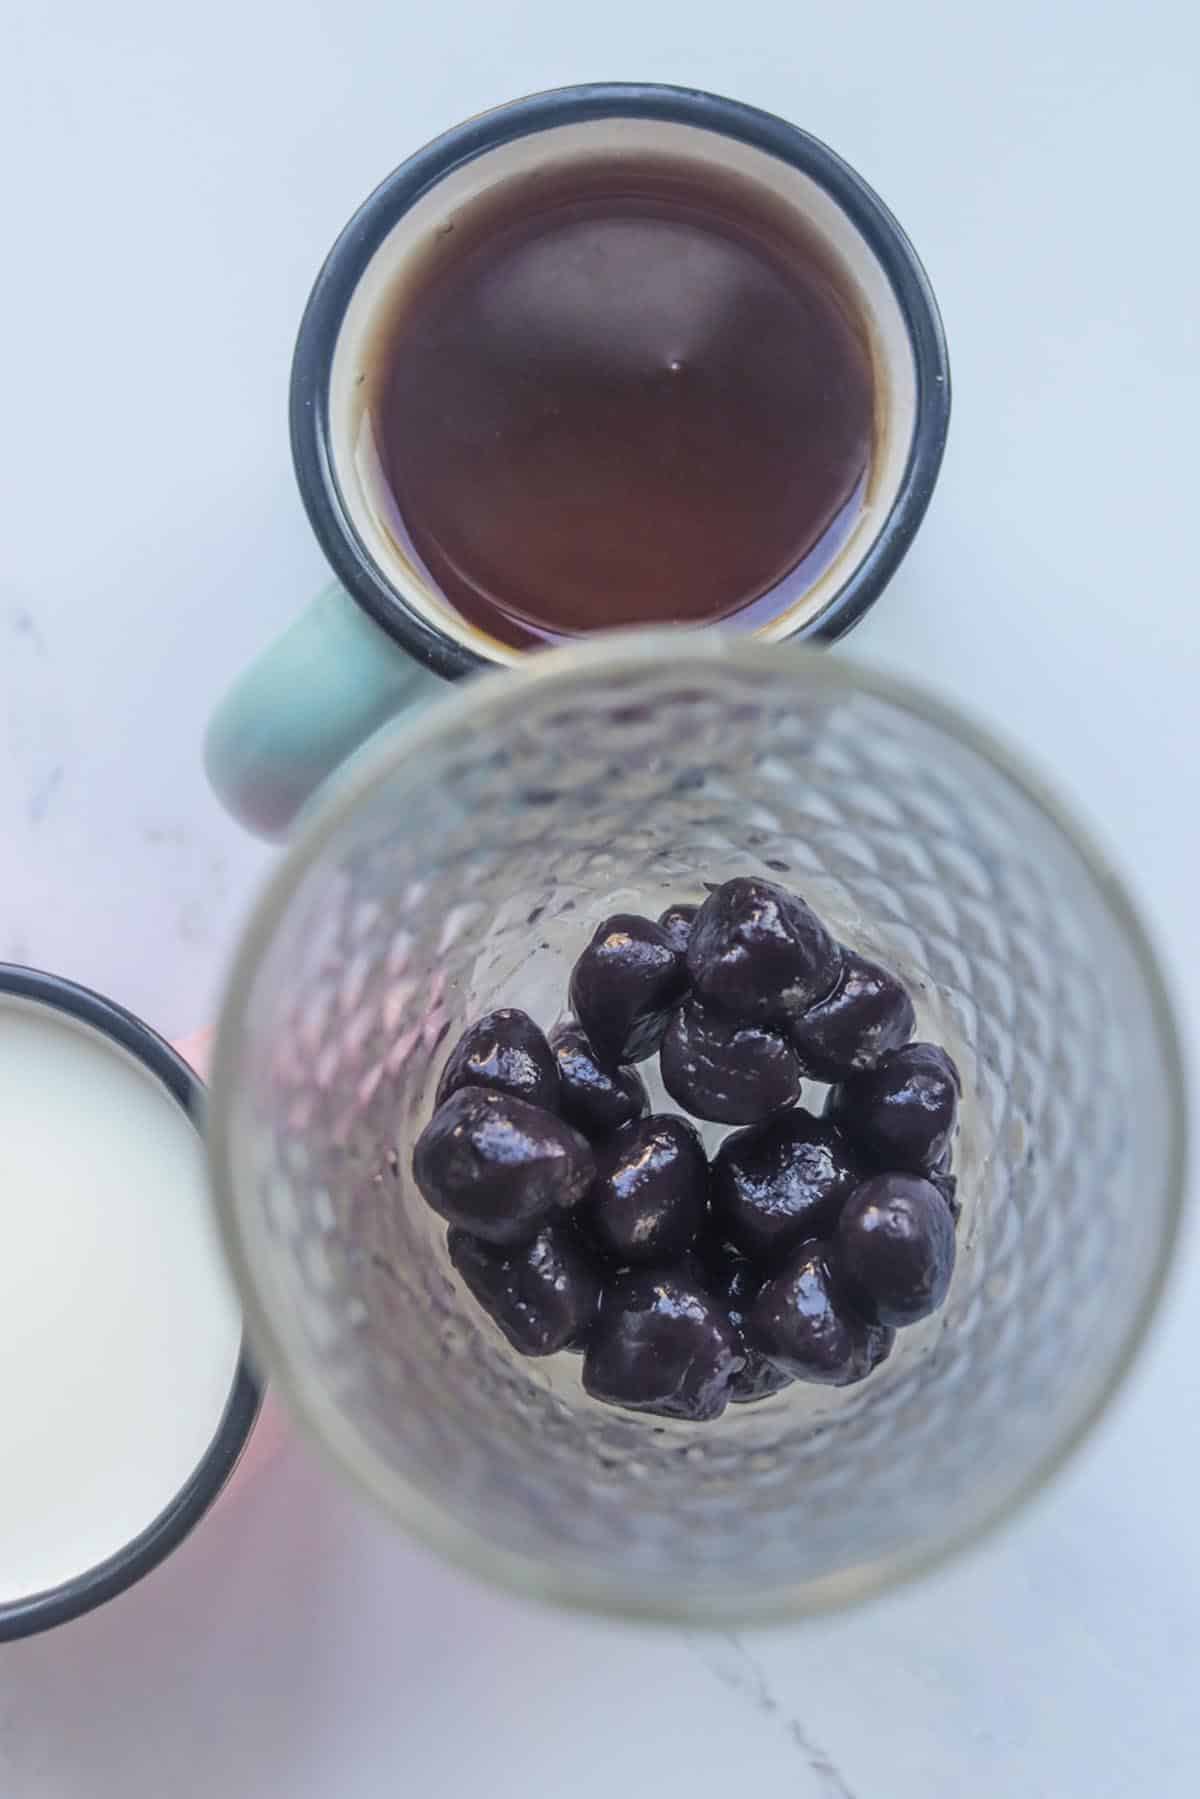 Black tapioca pearls in a glass.